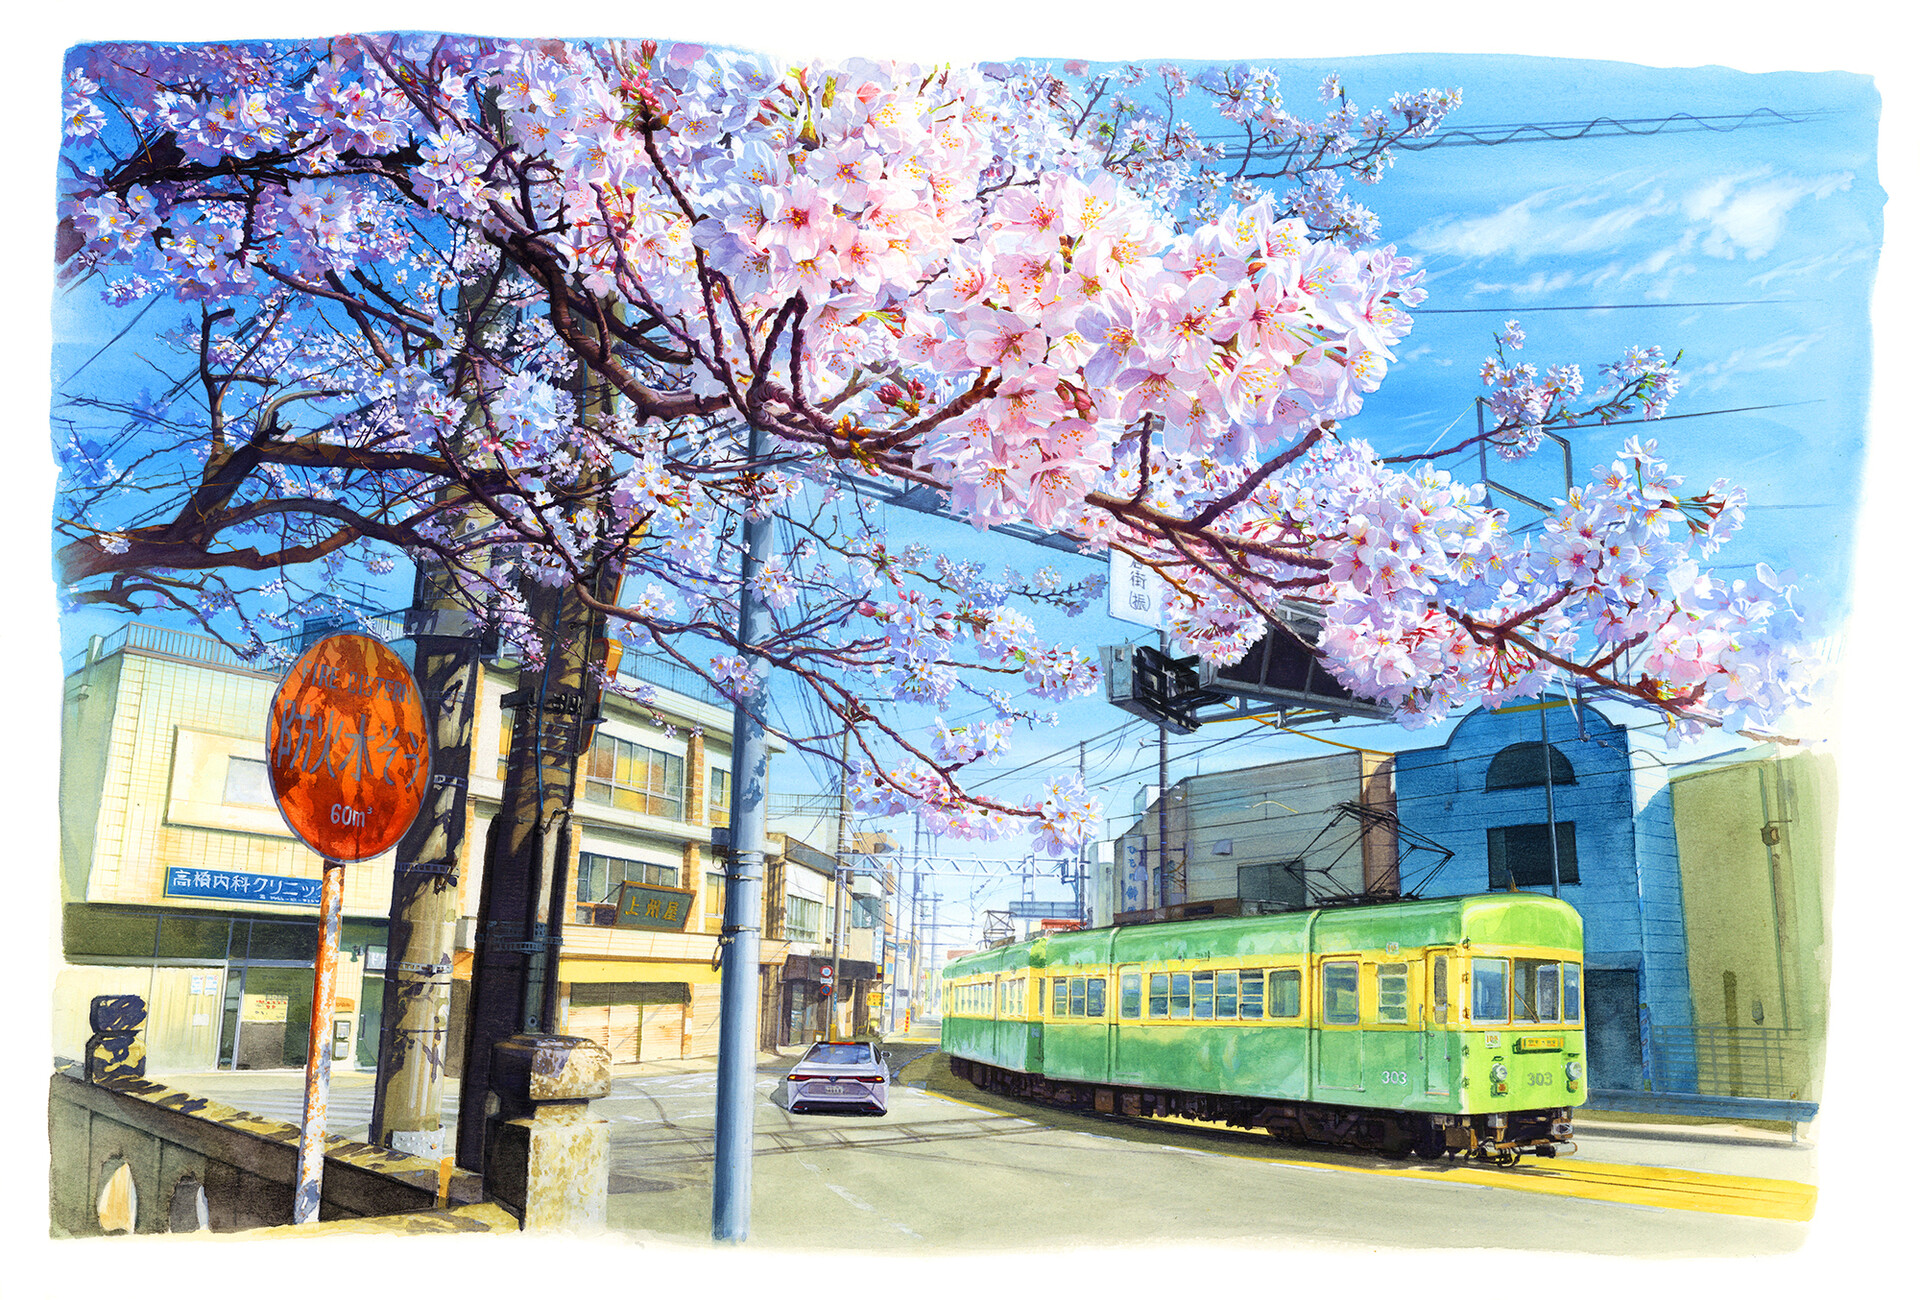 Artwork Digital Art Cityscape Nature Train Trees Cherry Blossom 1920x1300